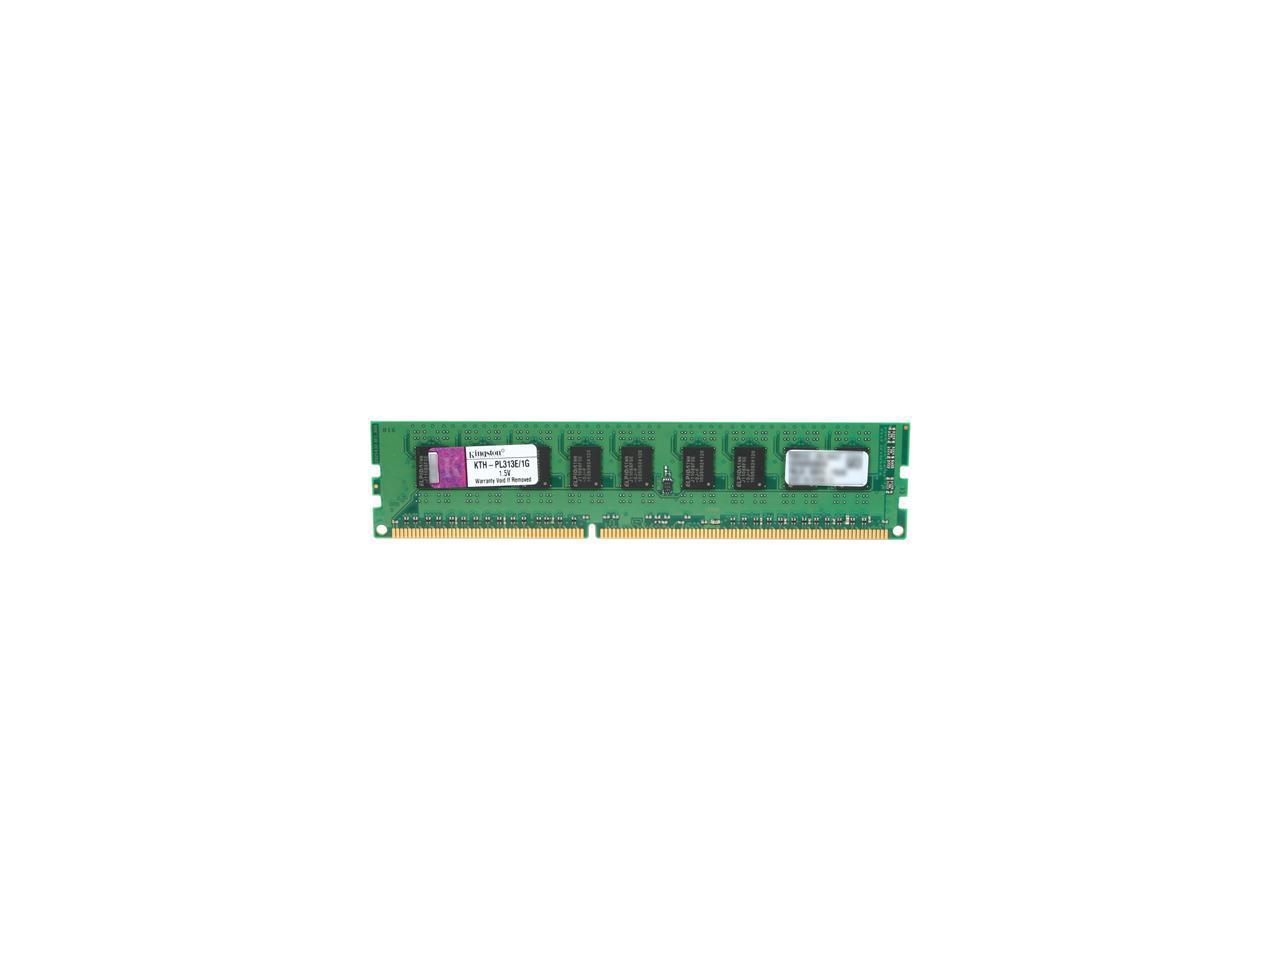 Kingston Technology System Specific Memory KAC-AL313E/1G 1GB DDR3 1333MHz ECC Memory Module Memory Modules 1GB, 1X1GB, DDR3, 1333MHz, 240-pin DIMM